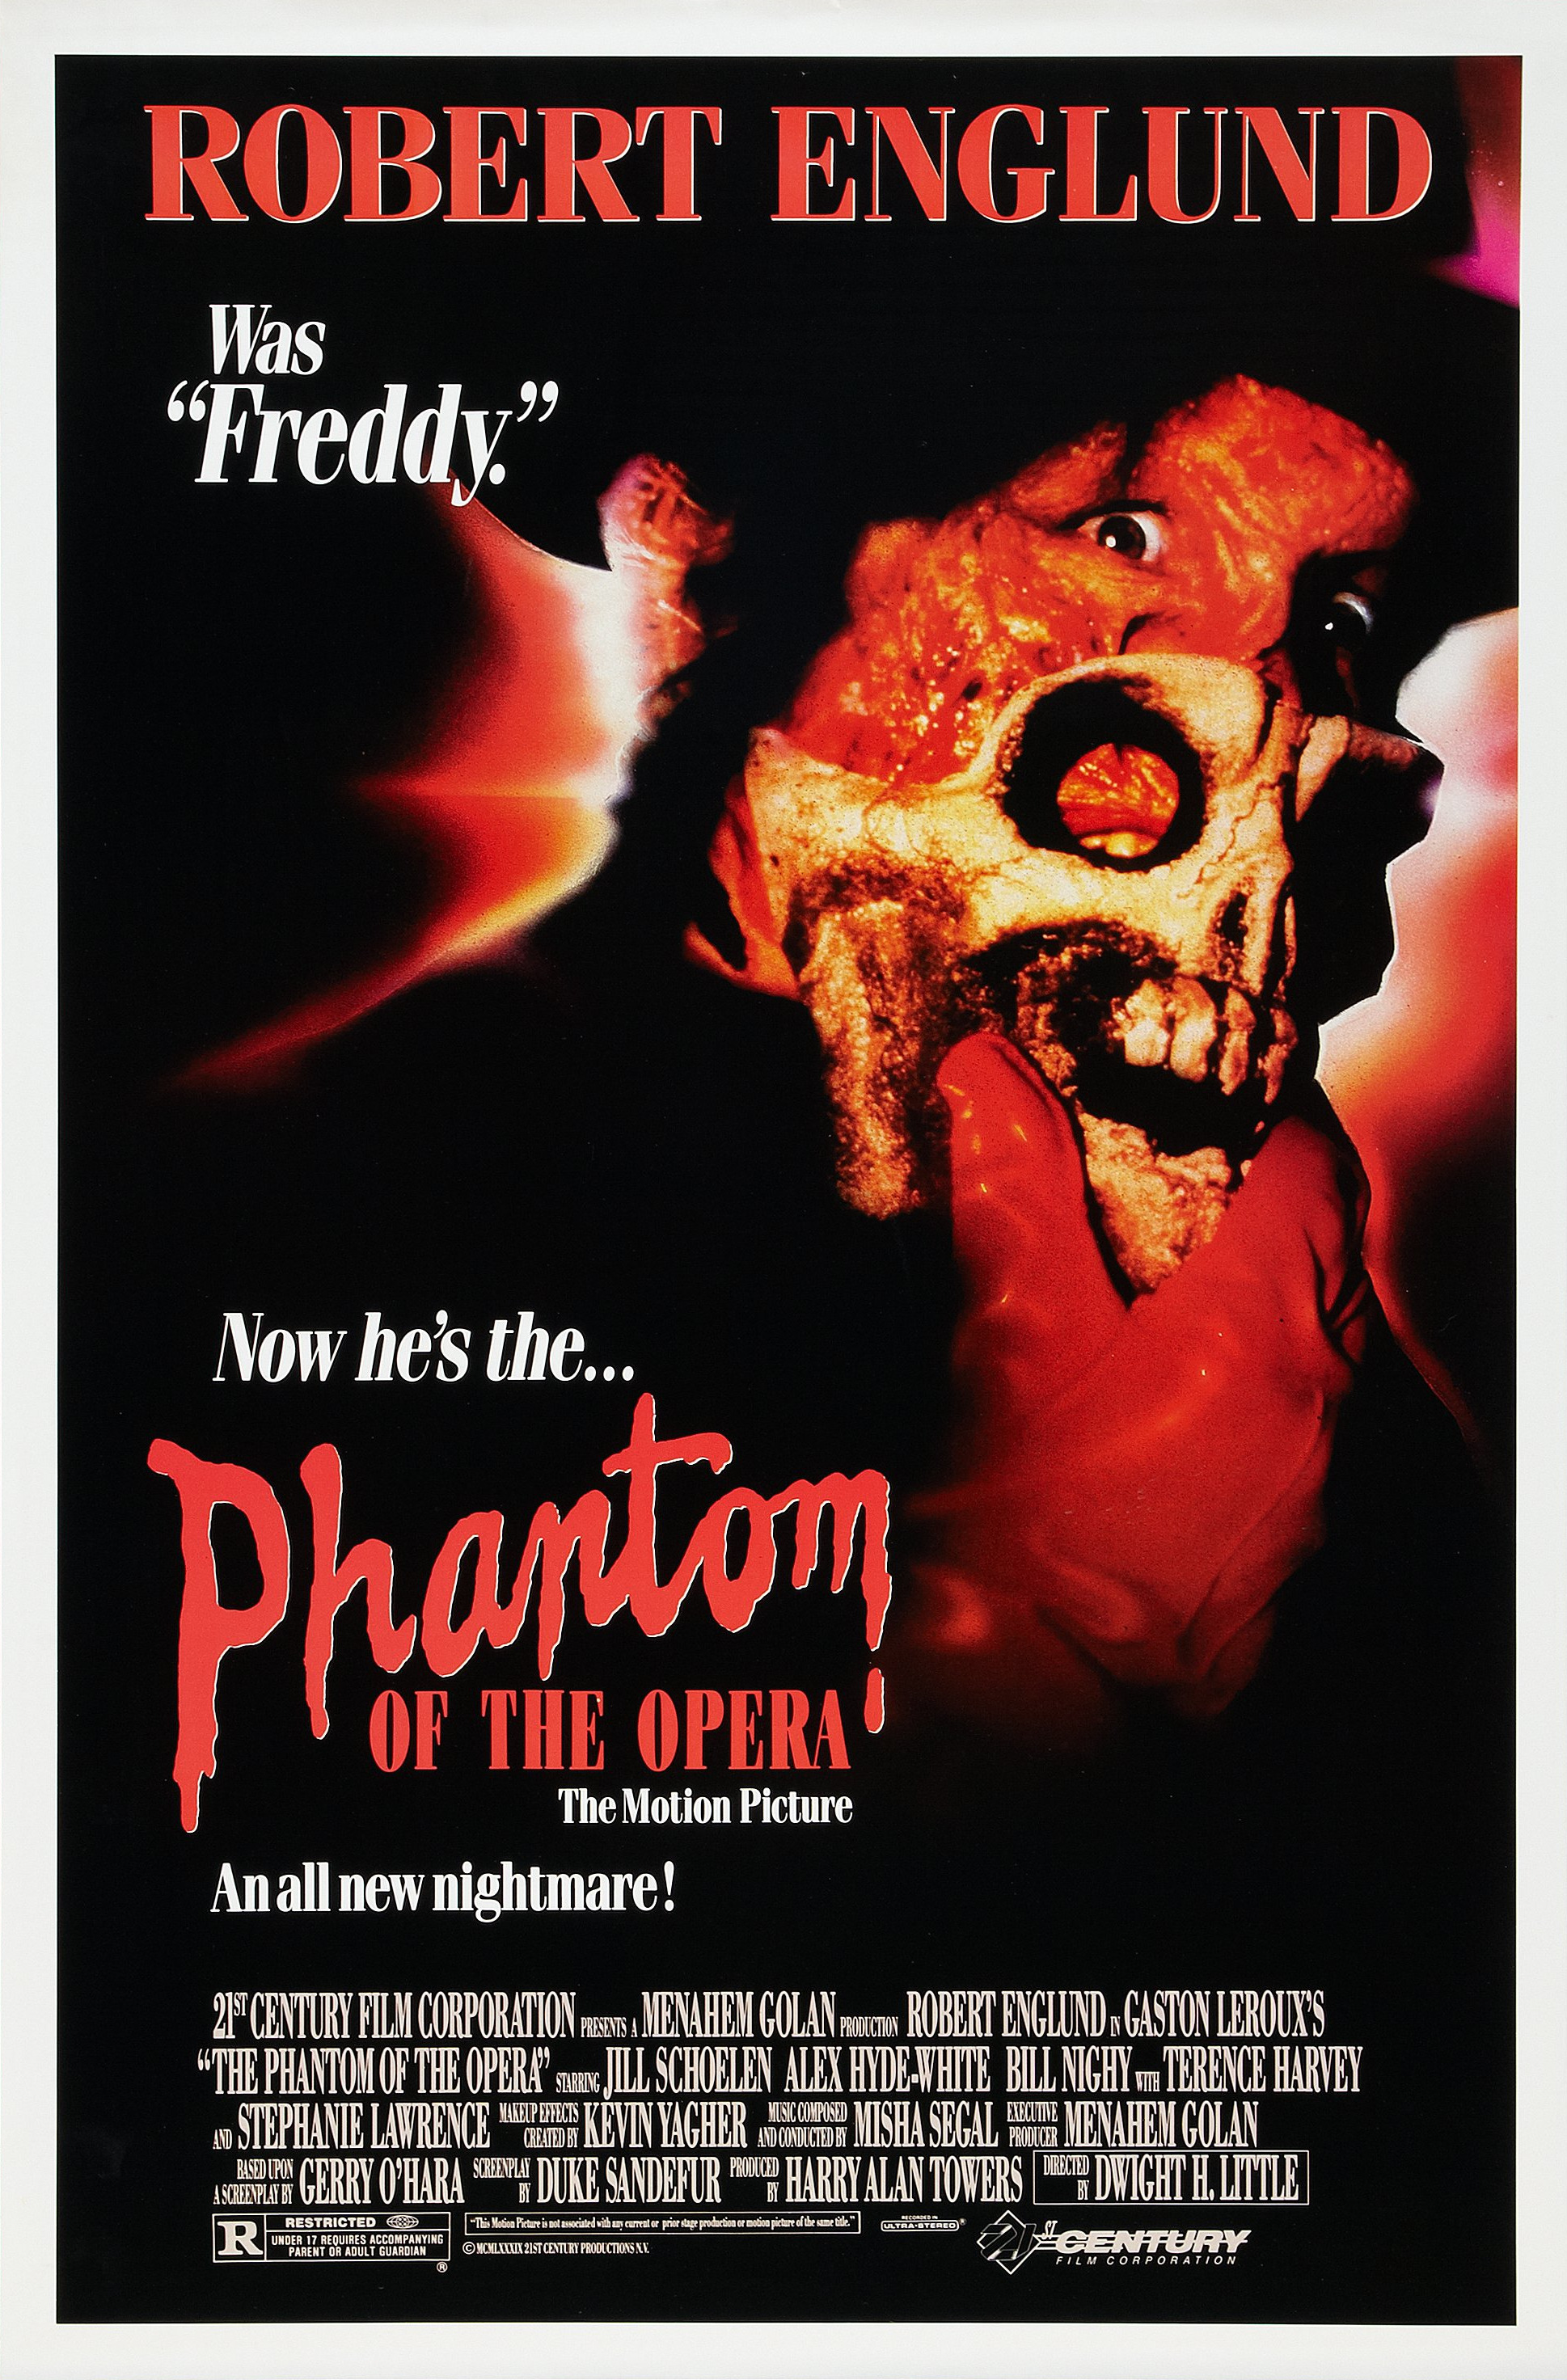 Mega Sized Movie Poster Image for Phantom of the Opera 